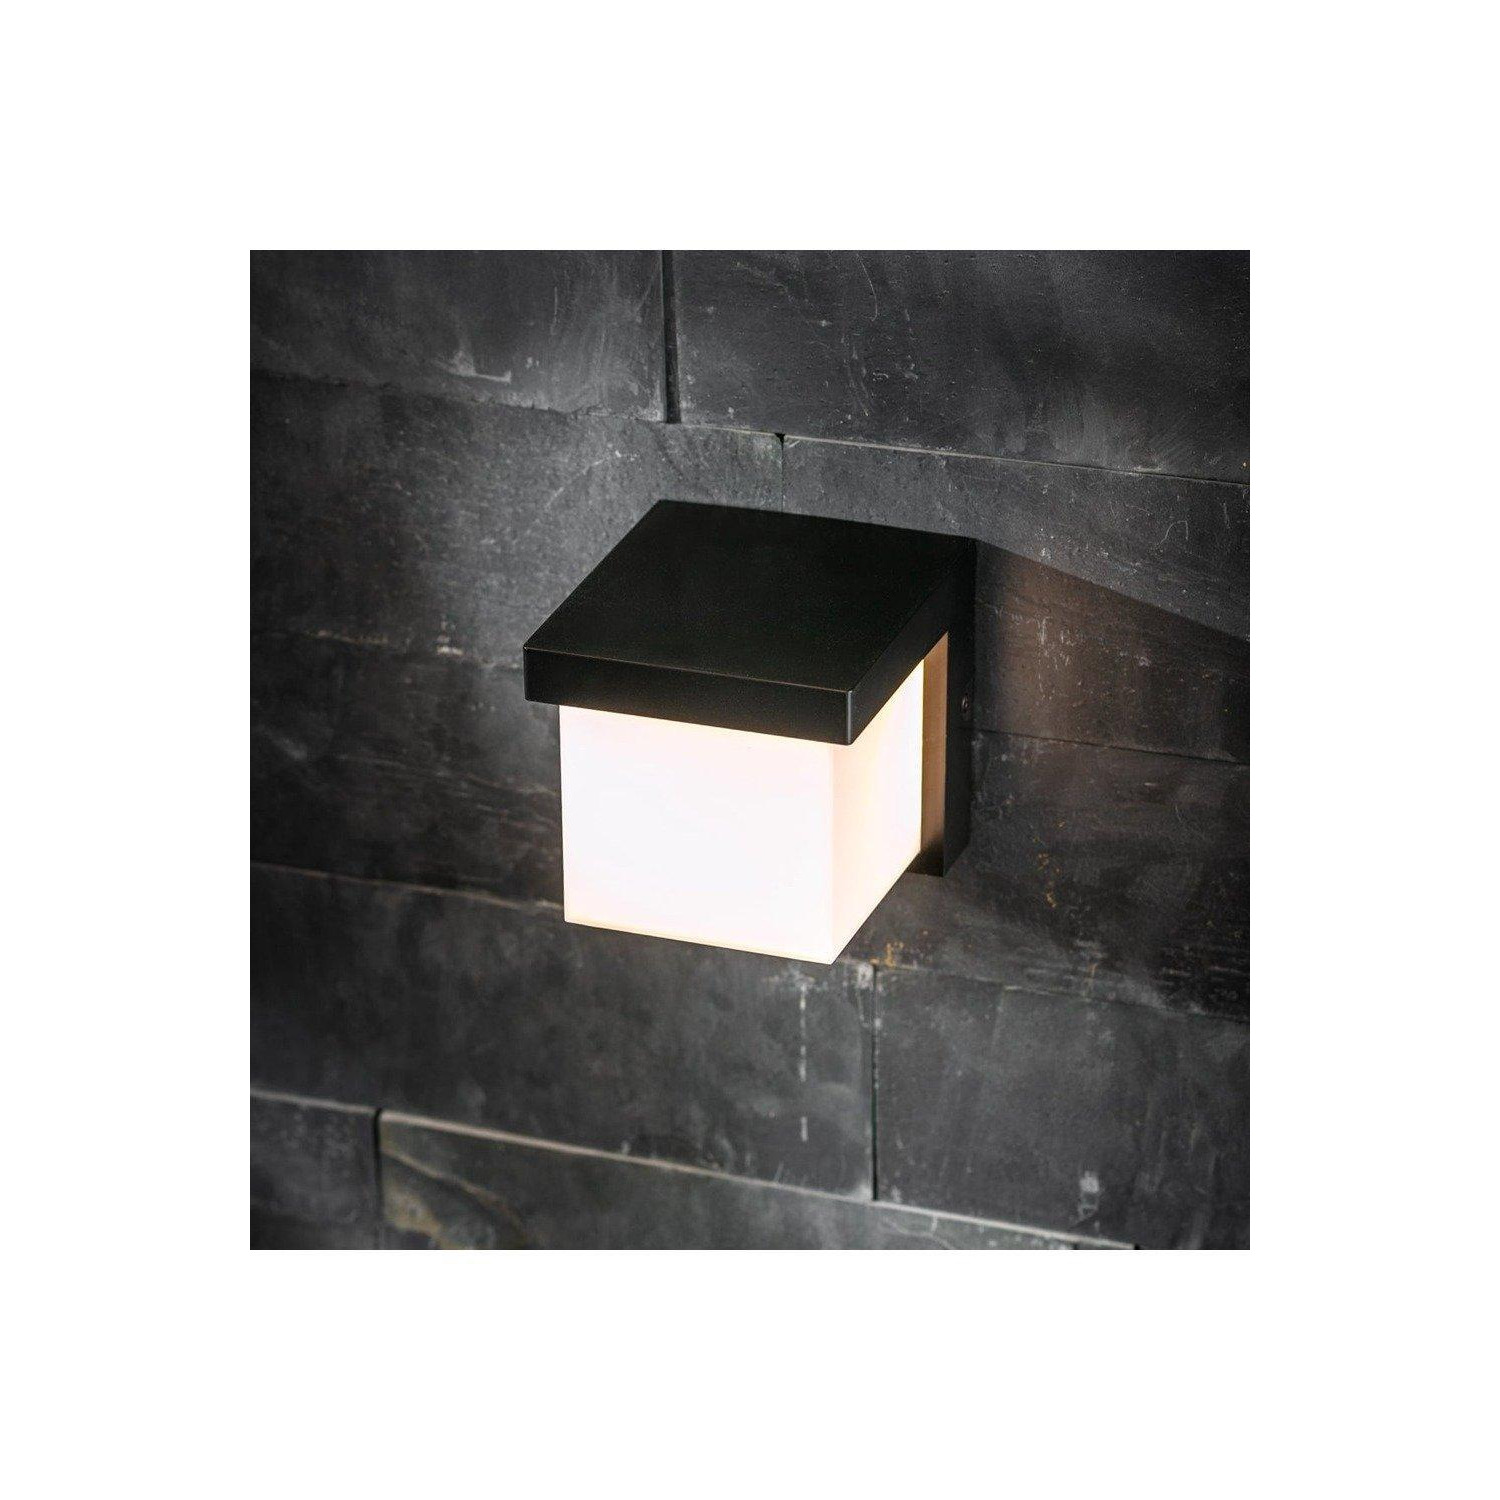 CGC Lighting 'Addison' Black Cube LED Outdoor Wall Light 4000k Natural White - image 1